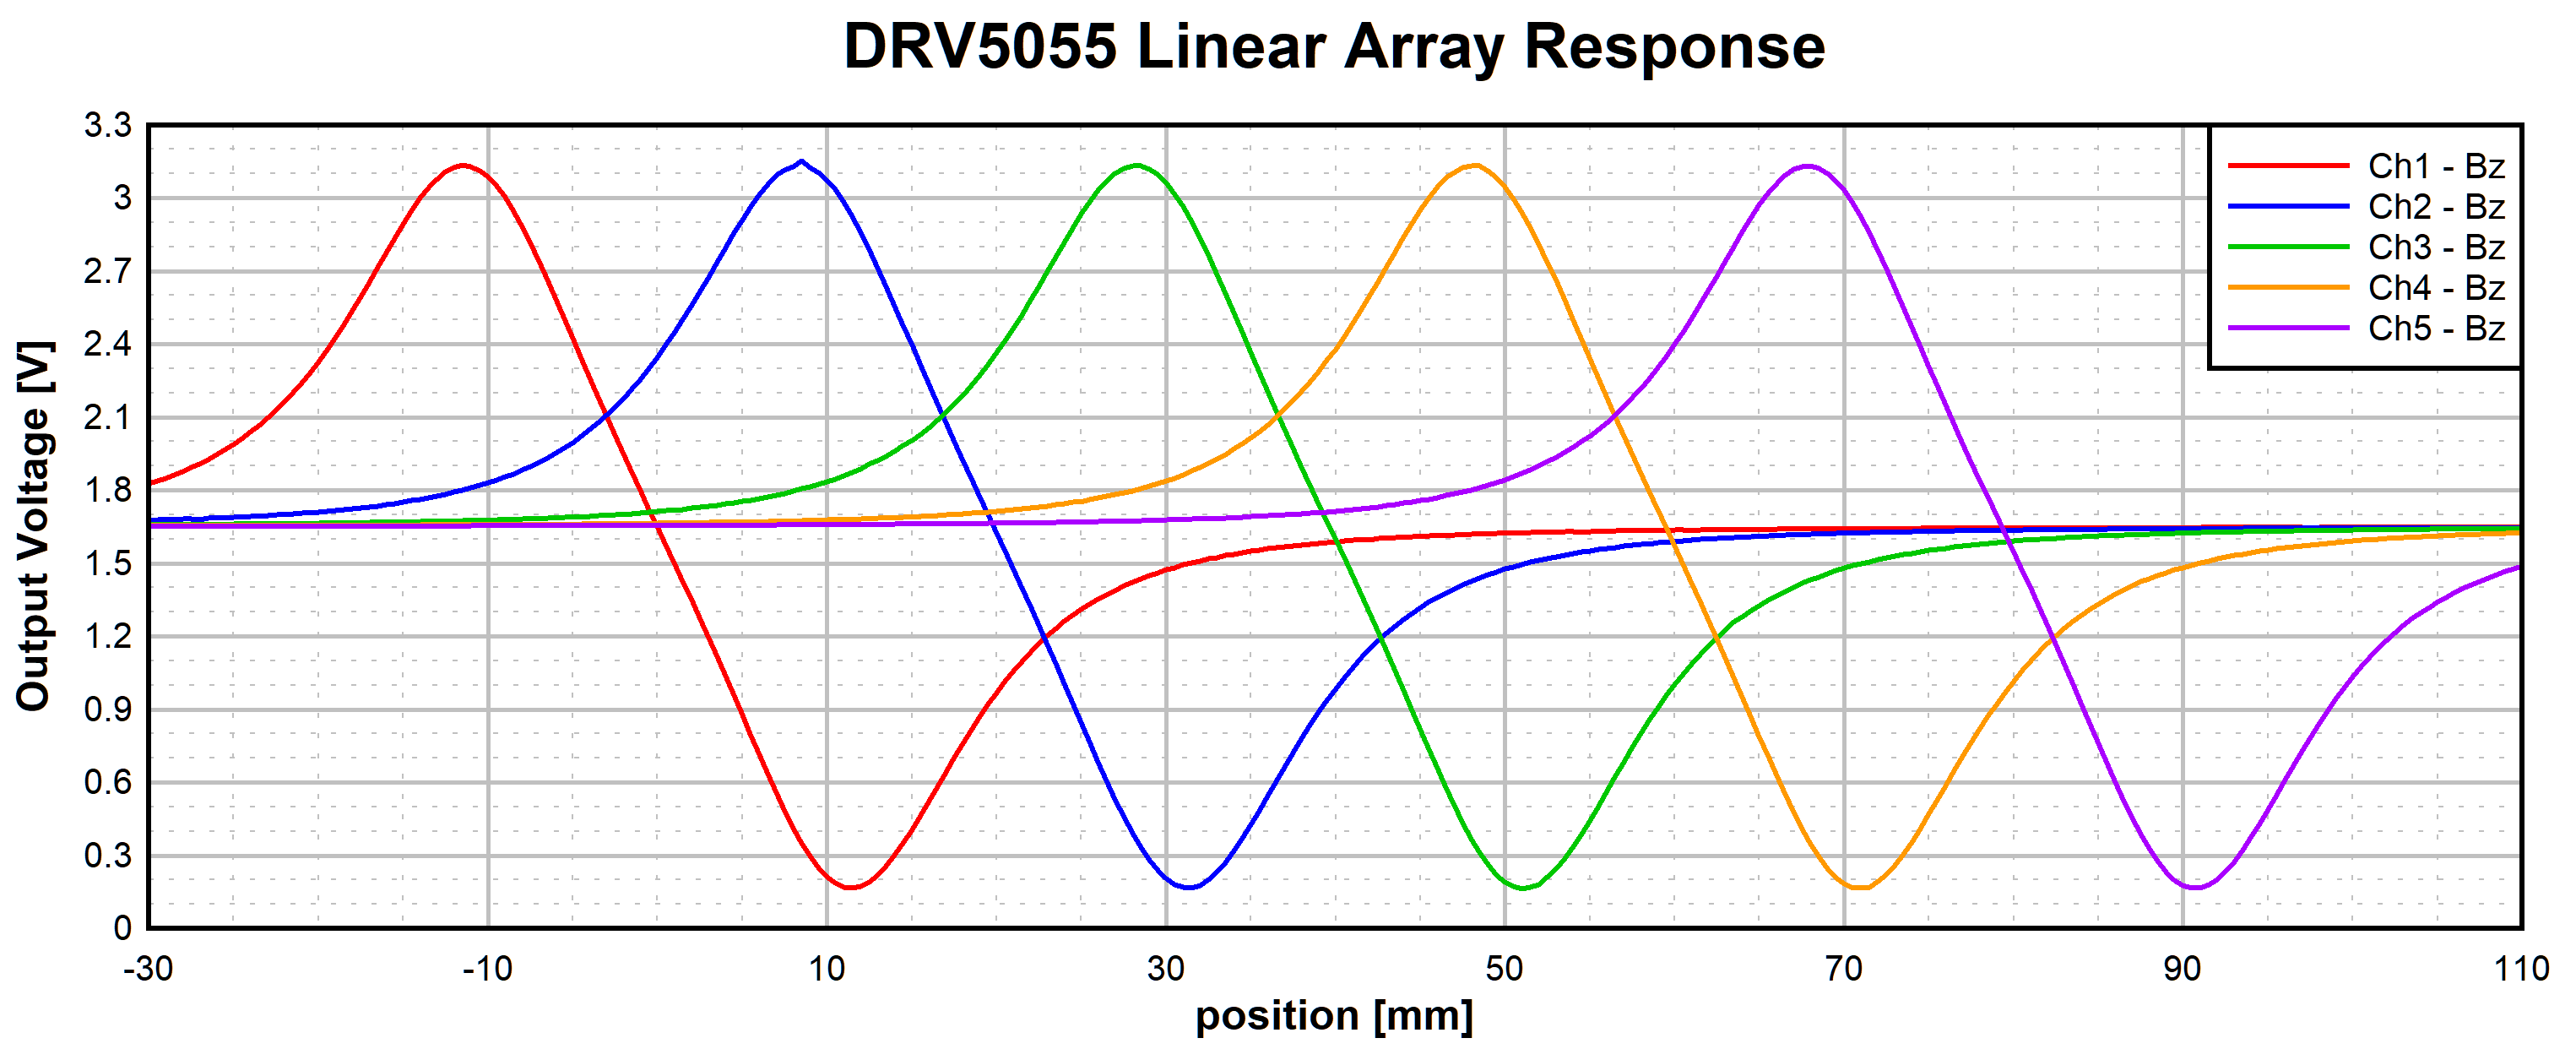  DRV5055 Output Response